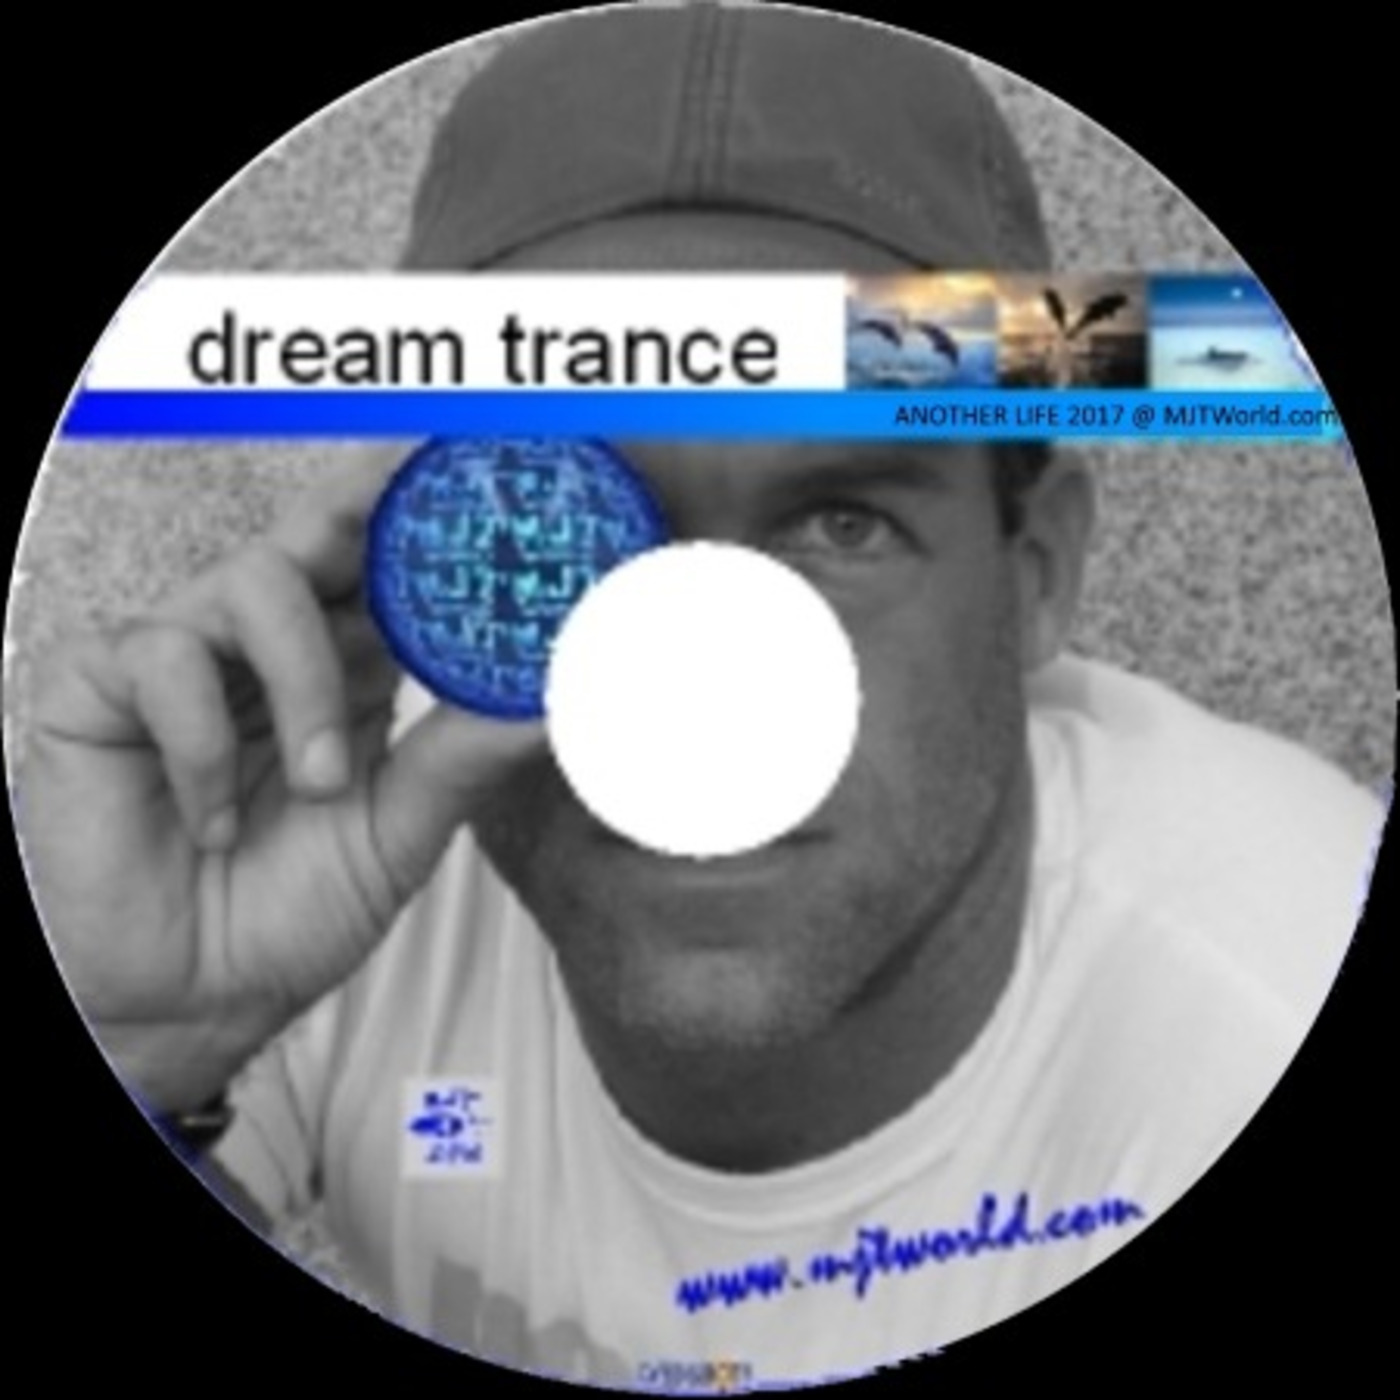 Dreamtrance - Another life 2k17 @ MJTWorld